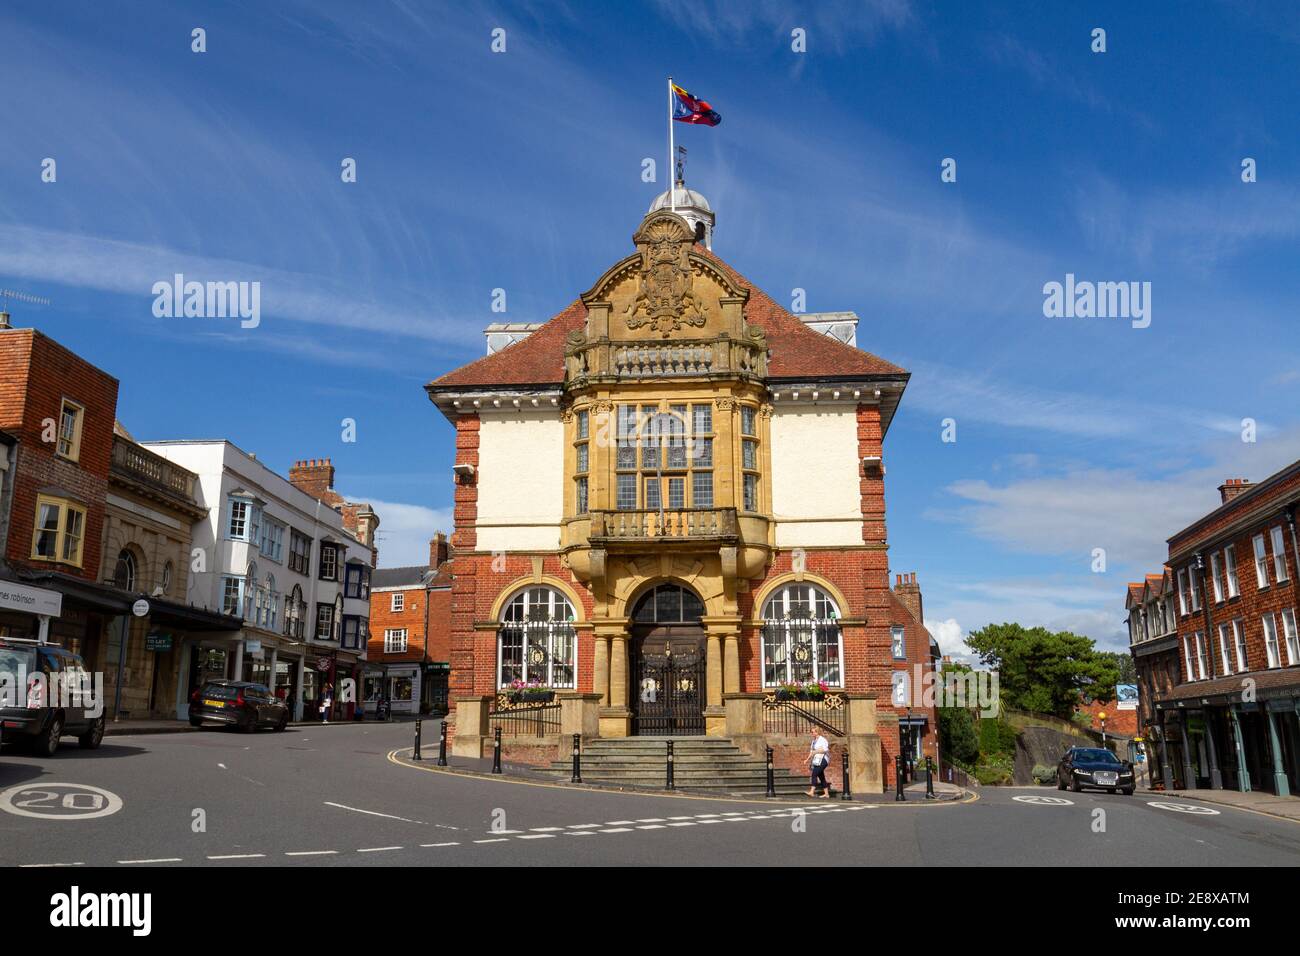 Marlborough Town Hall in the market town of Marlborough, Wiltshire, UK. Stock Photo